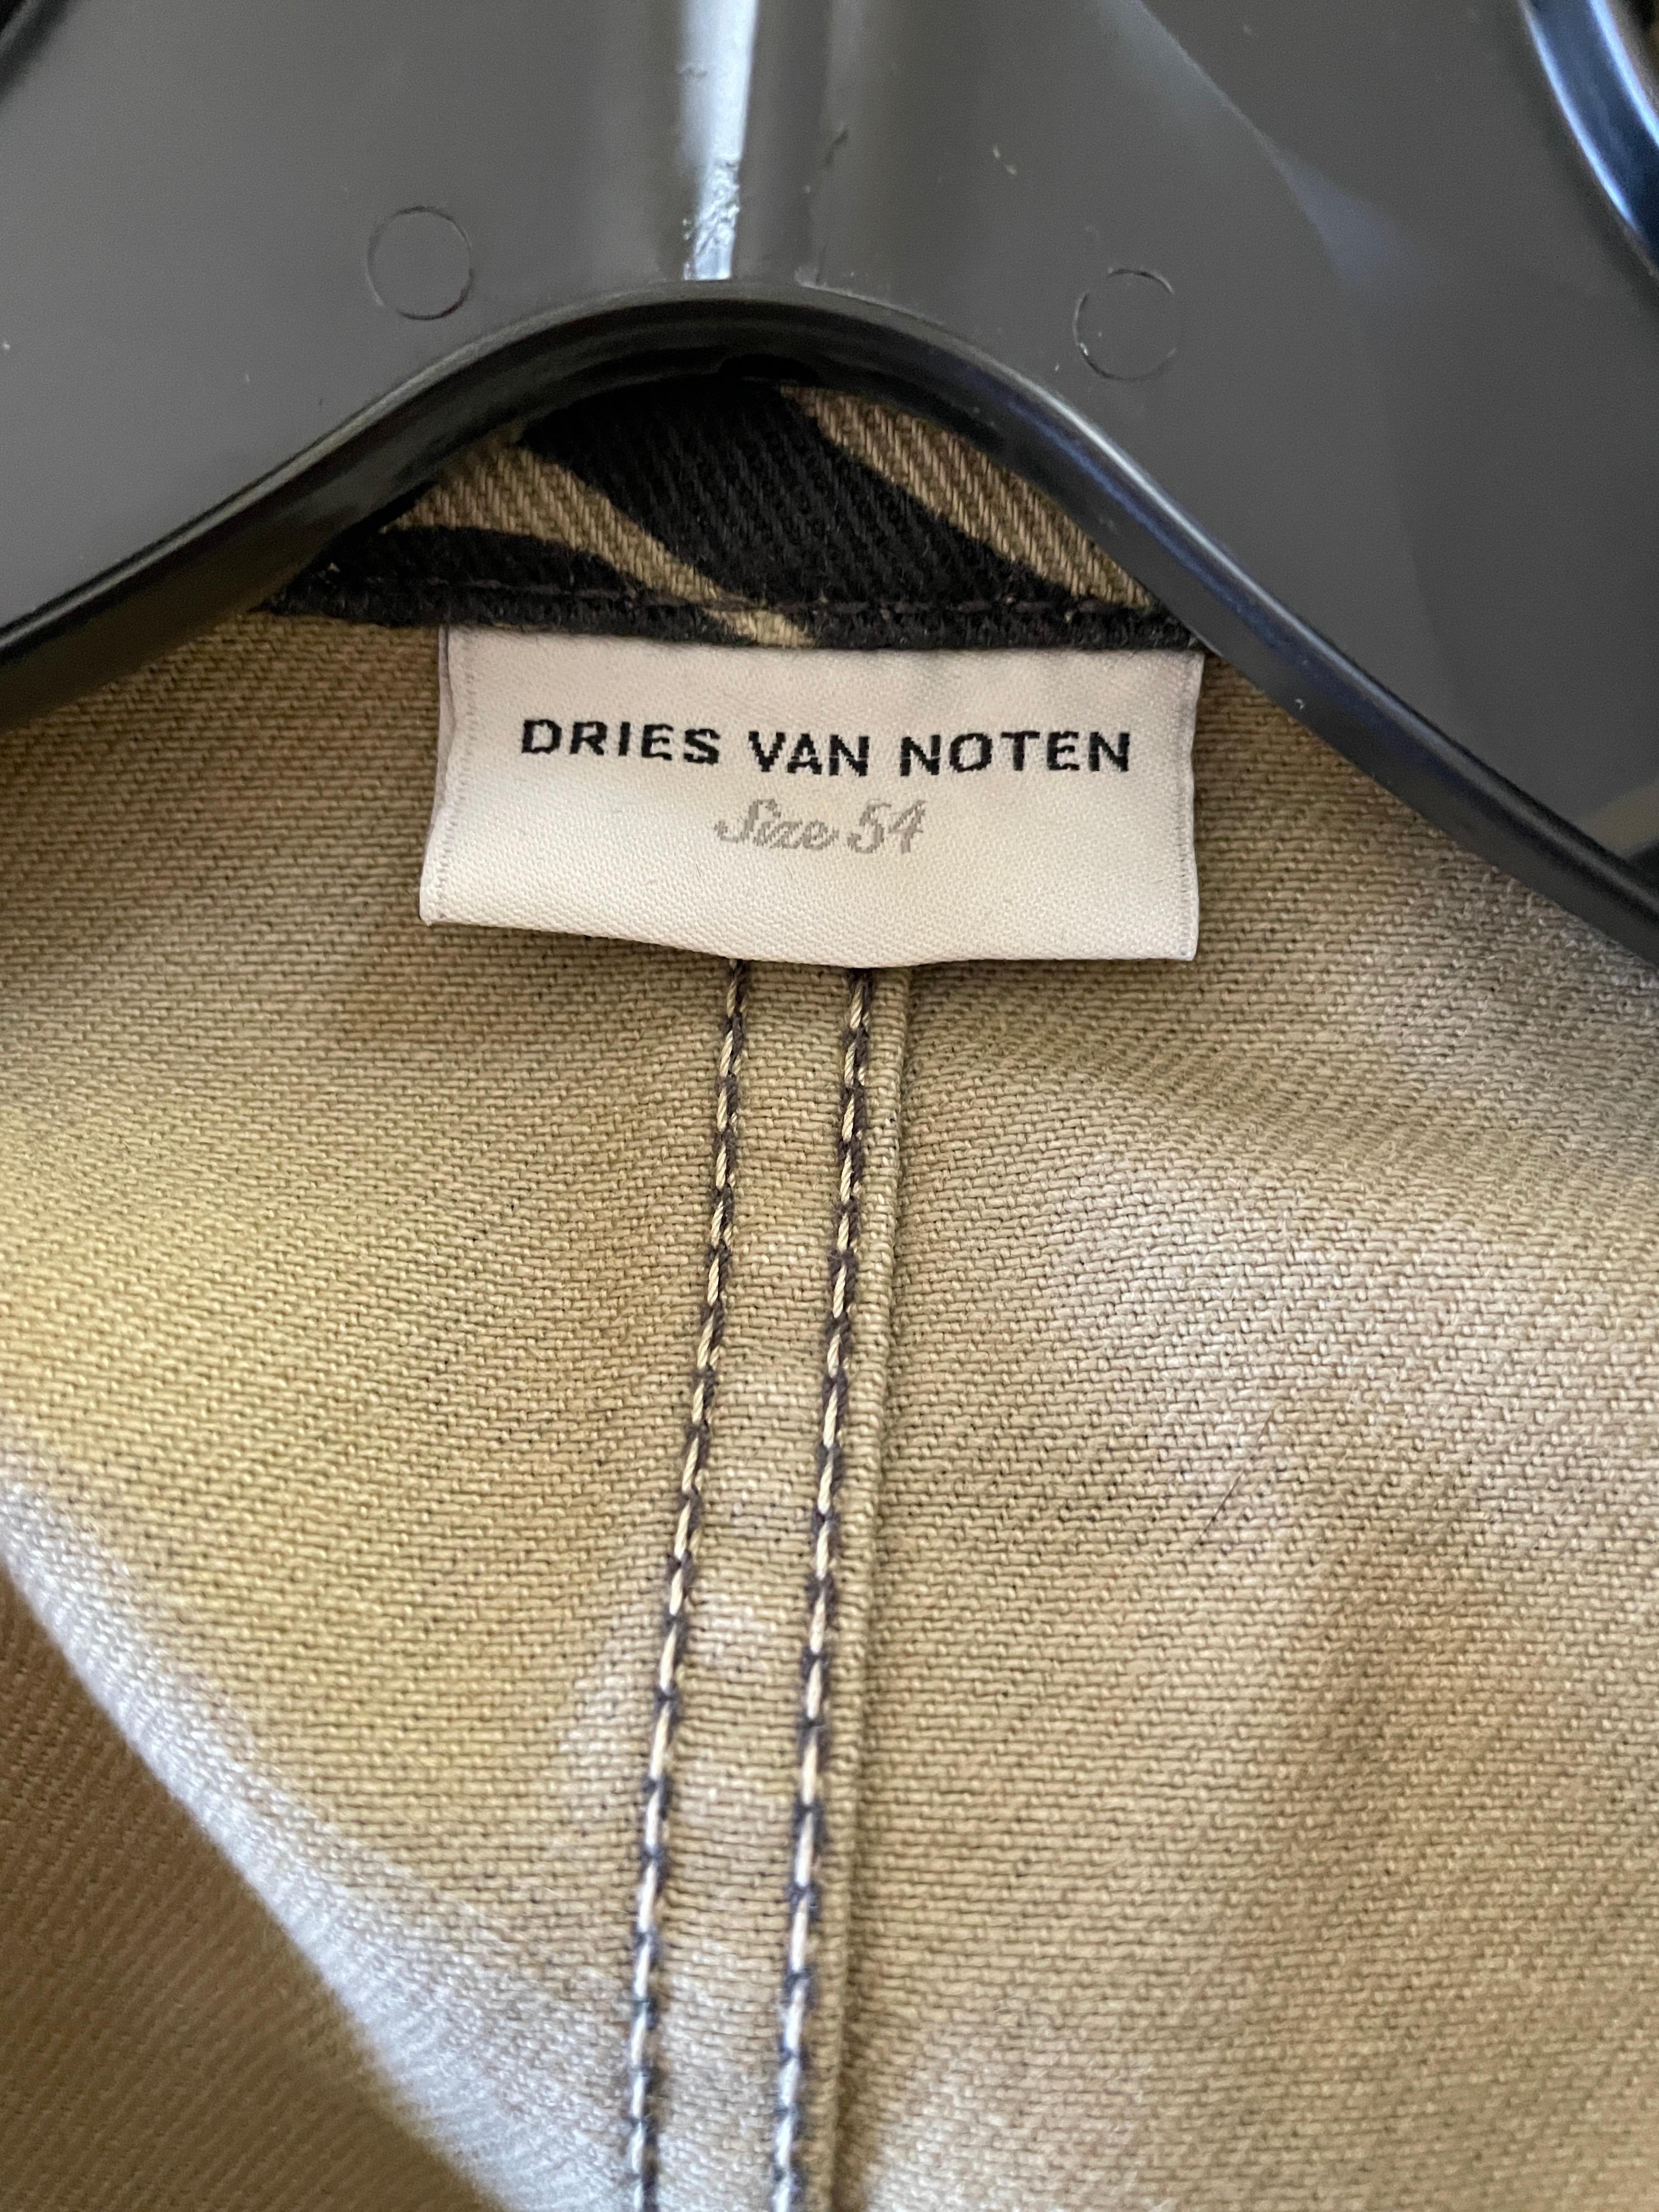 高知インター店】 Dries 即決 海外 Small Size jacket pattern patchwork Noten Van -  海外商品購入代行 - labelians.fr